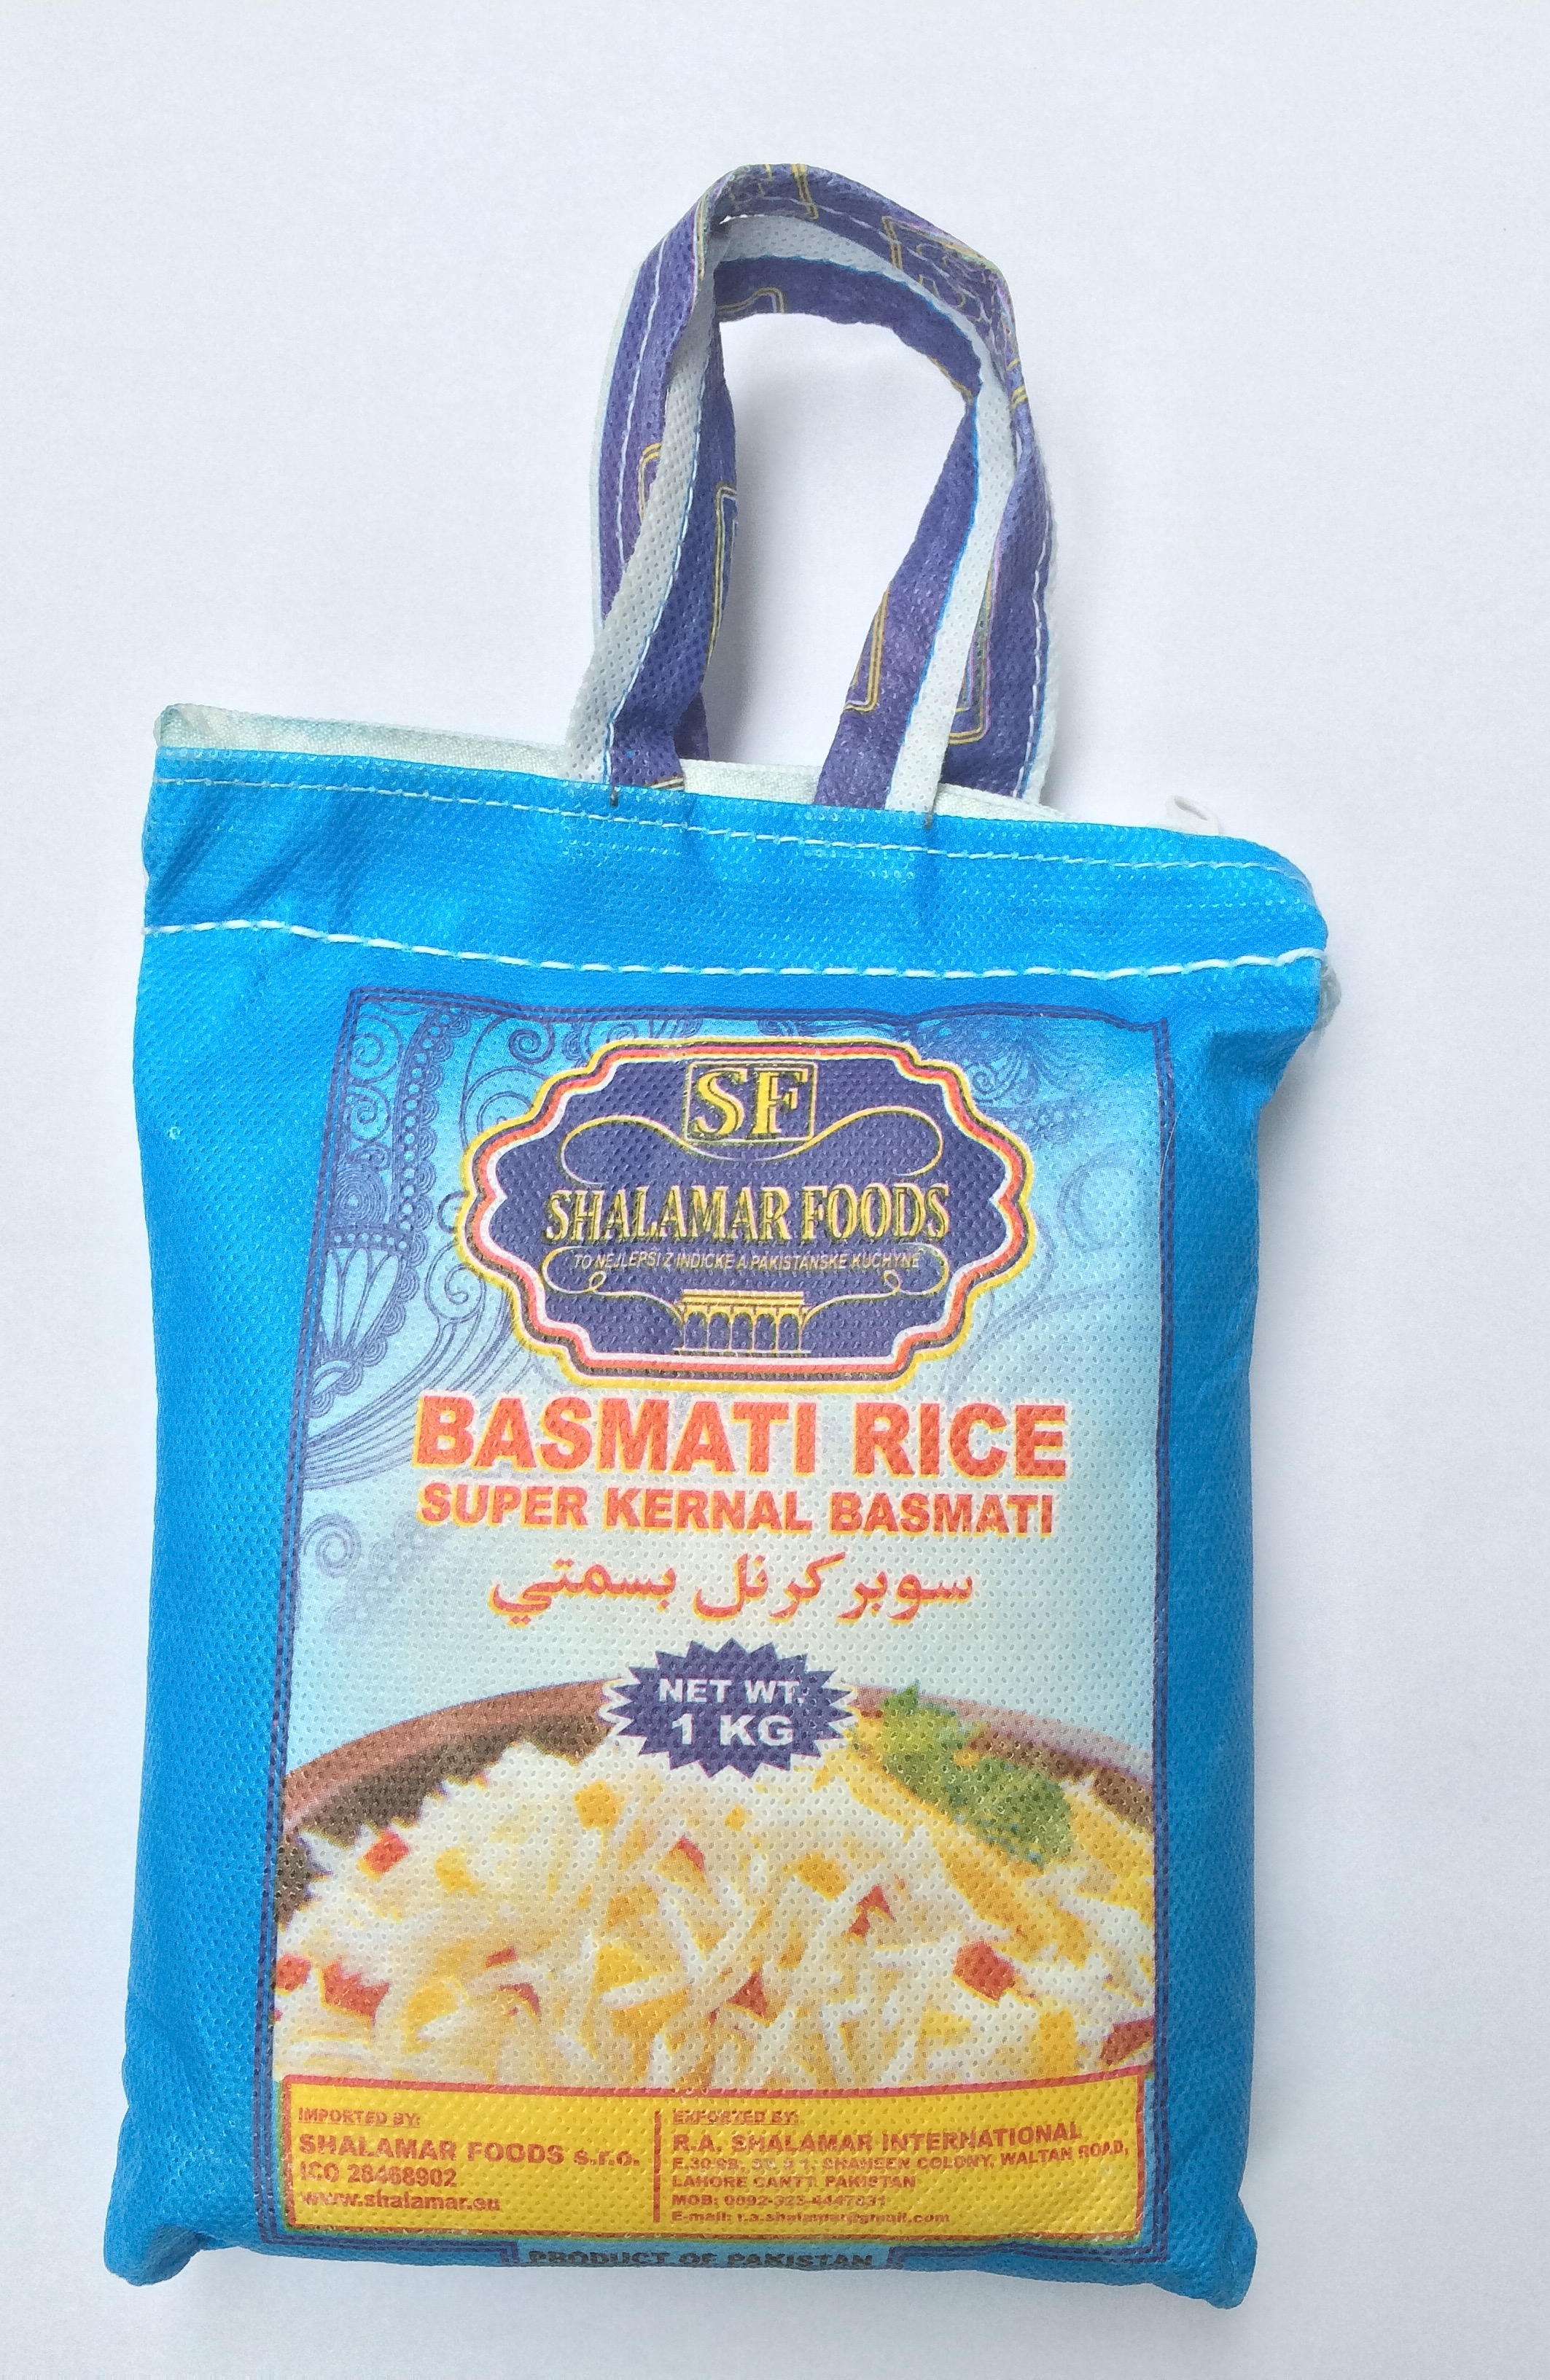 Basmati ryža - SHALAMAR FOODS Super kernal basmati